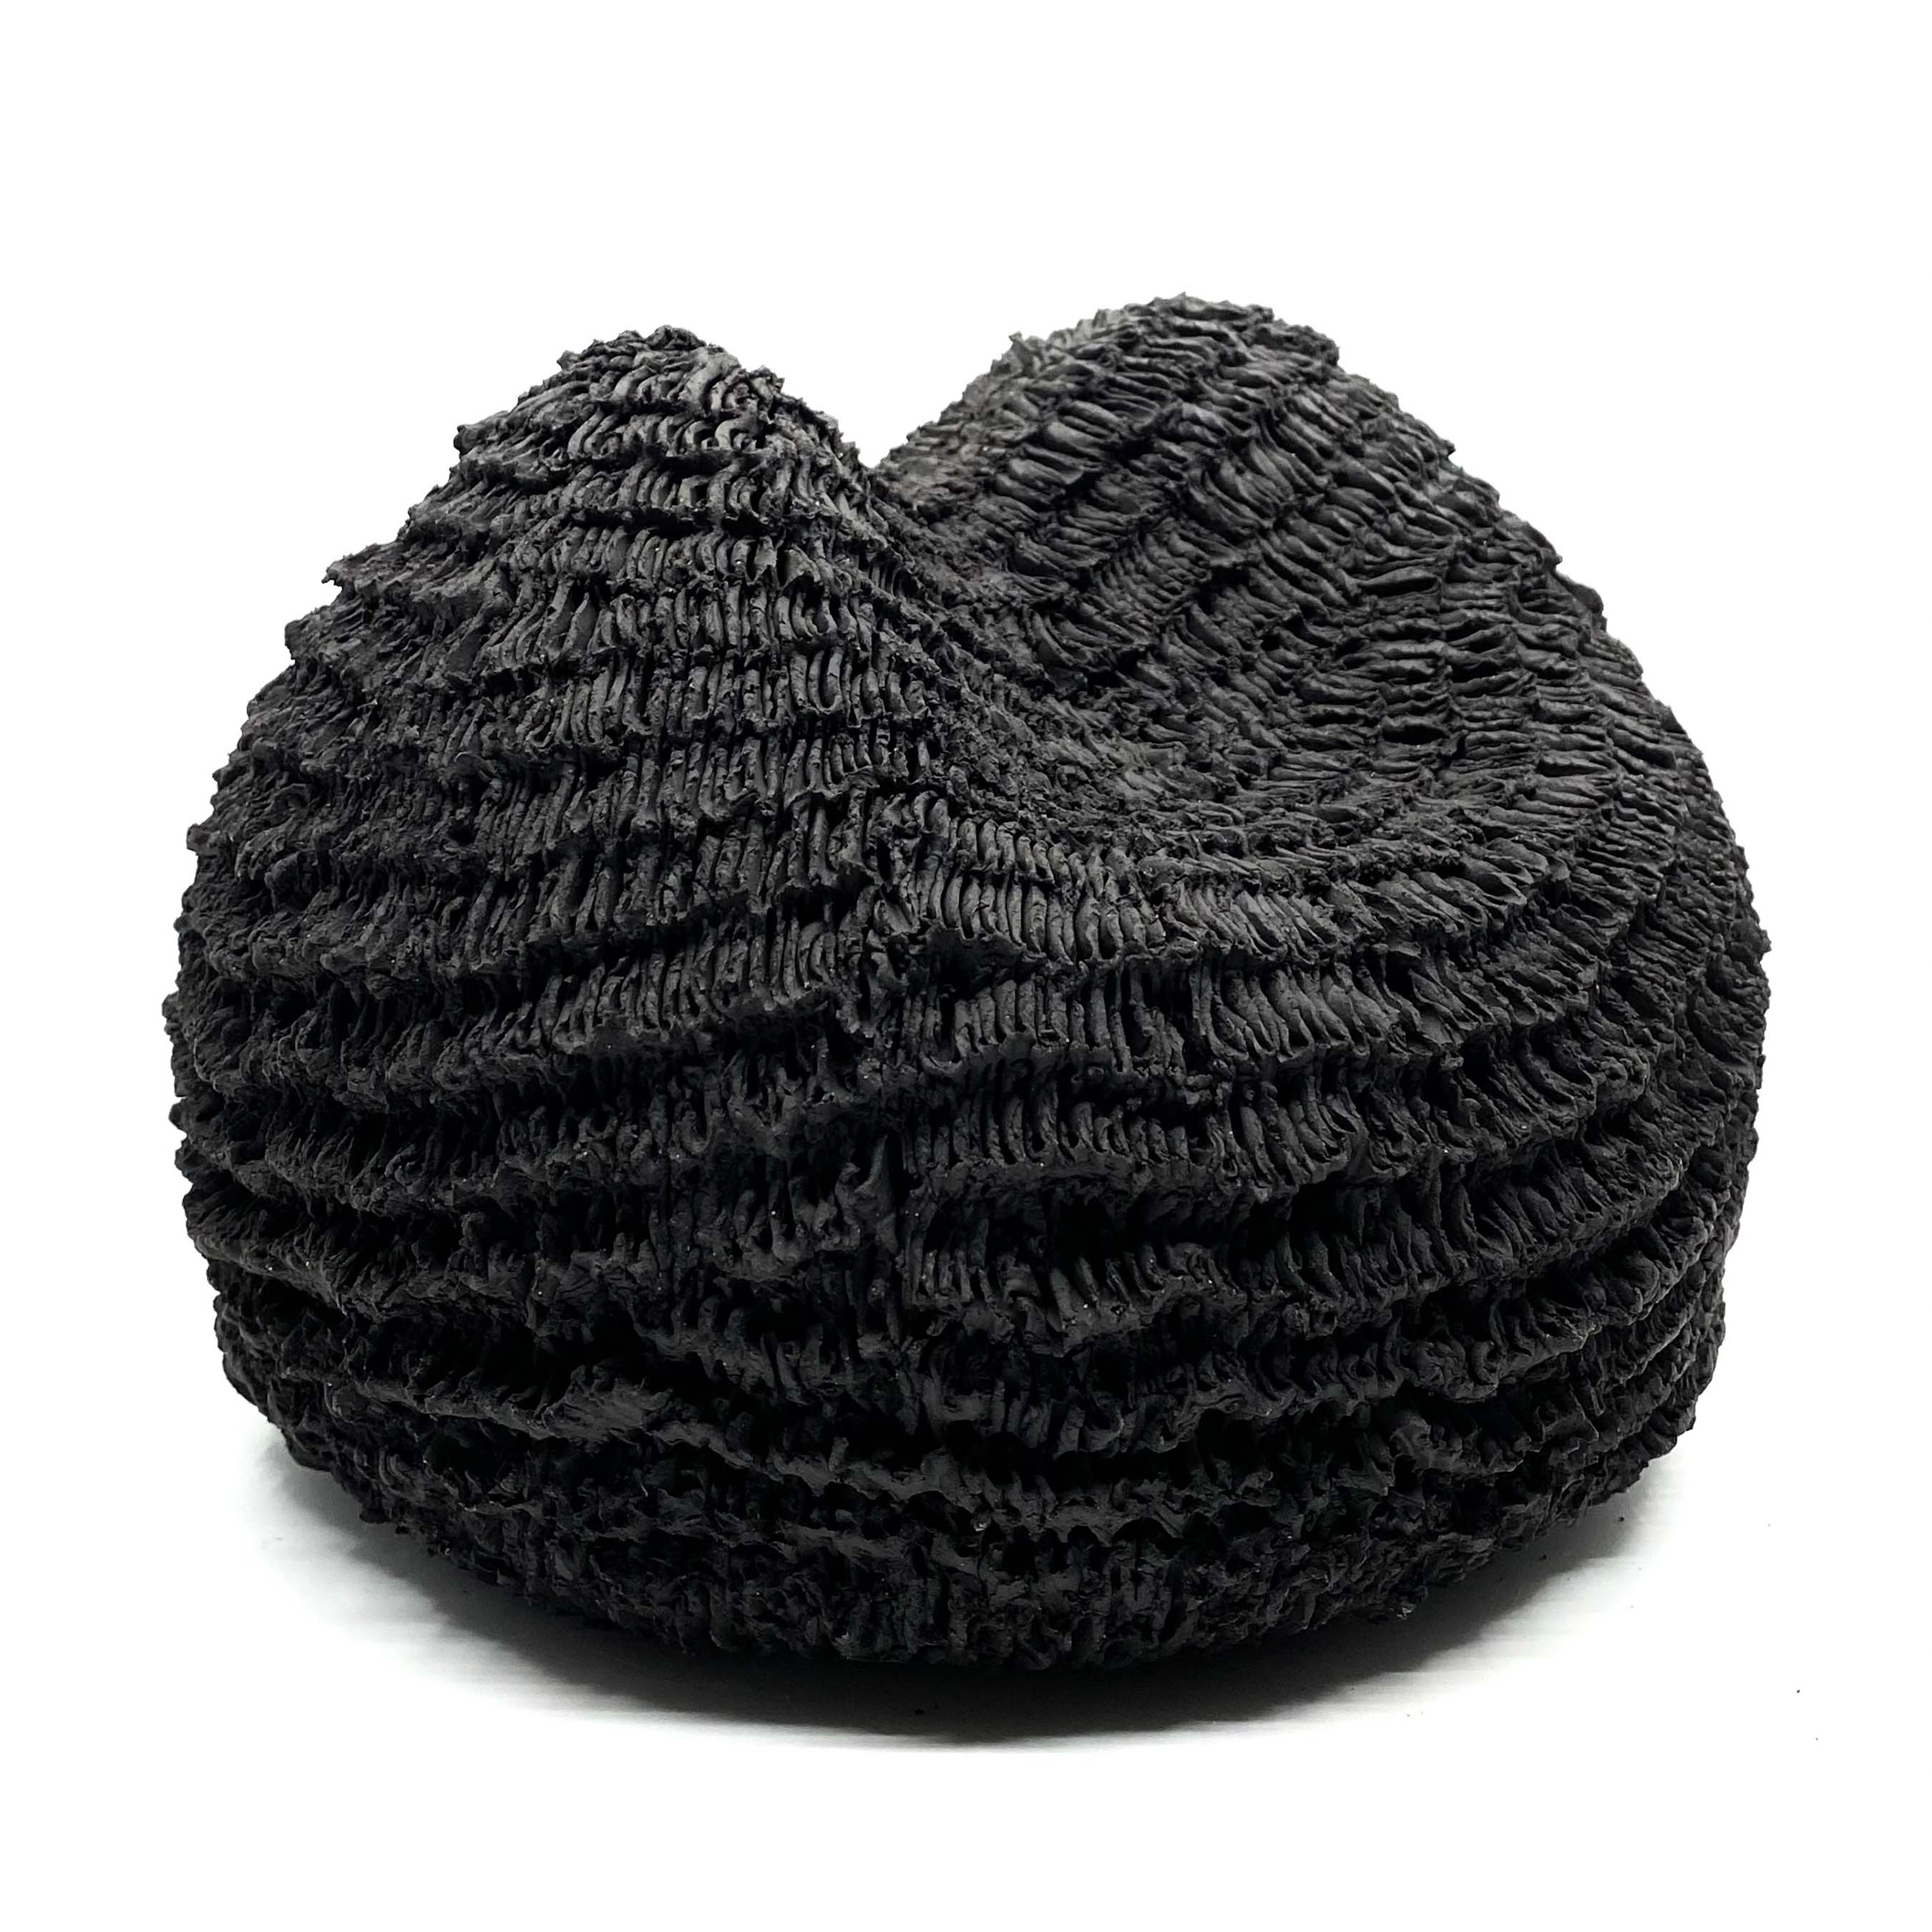 black textured ceramic art piece by donte hayes